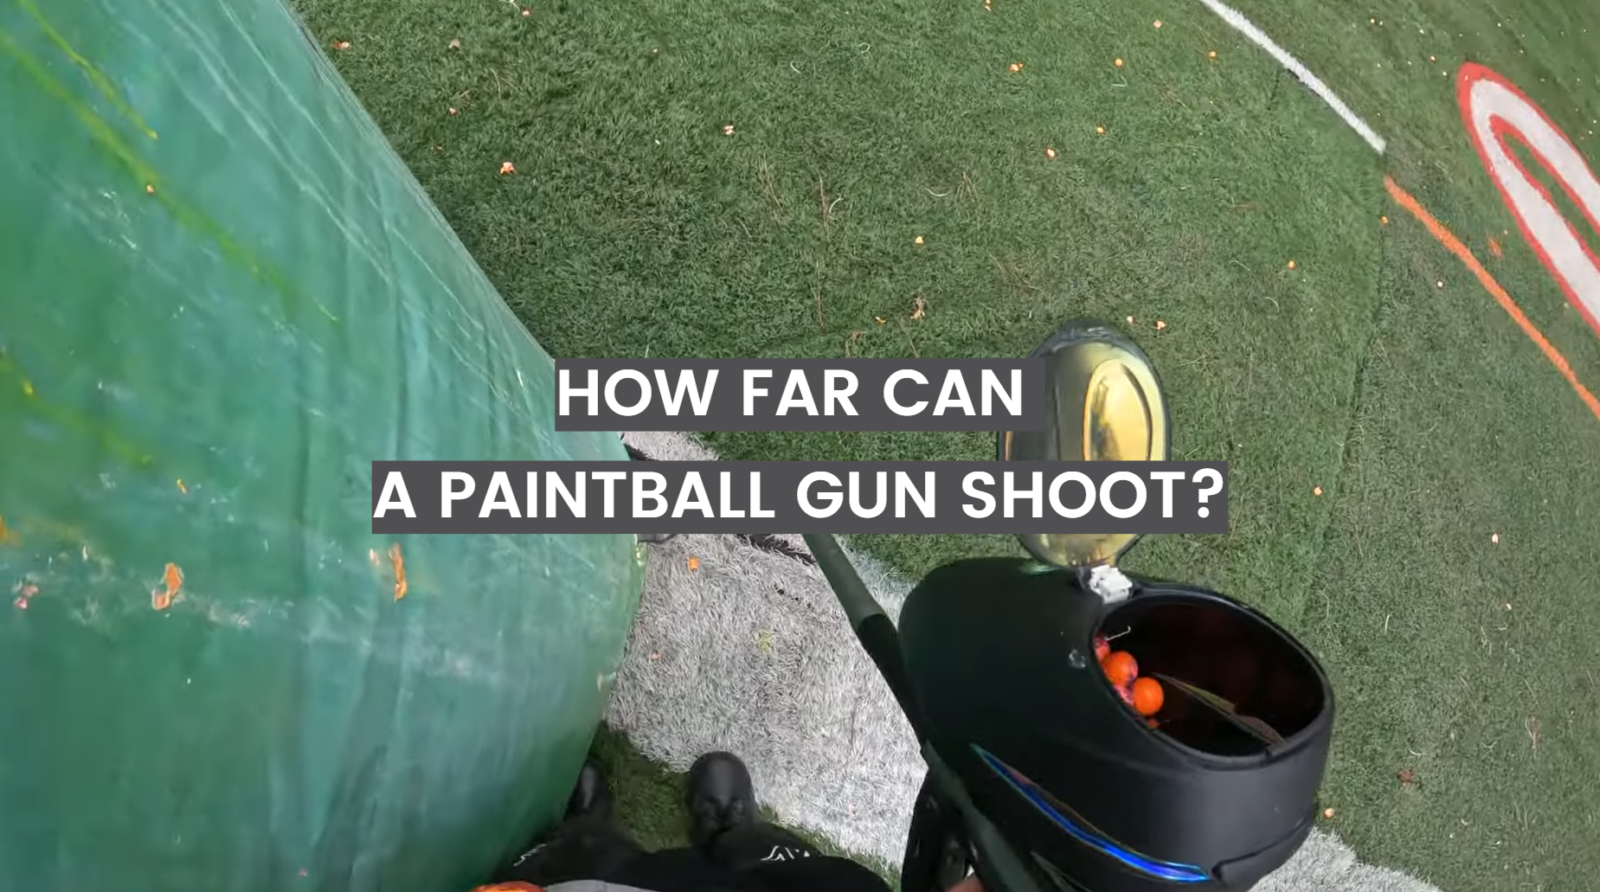 How Far Can a Paintball Gun Shoot?